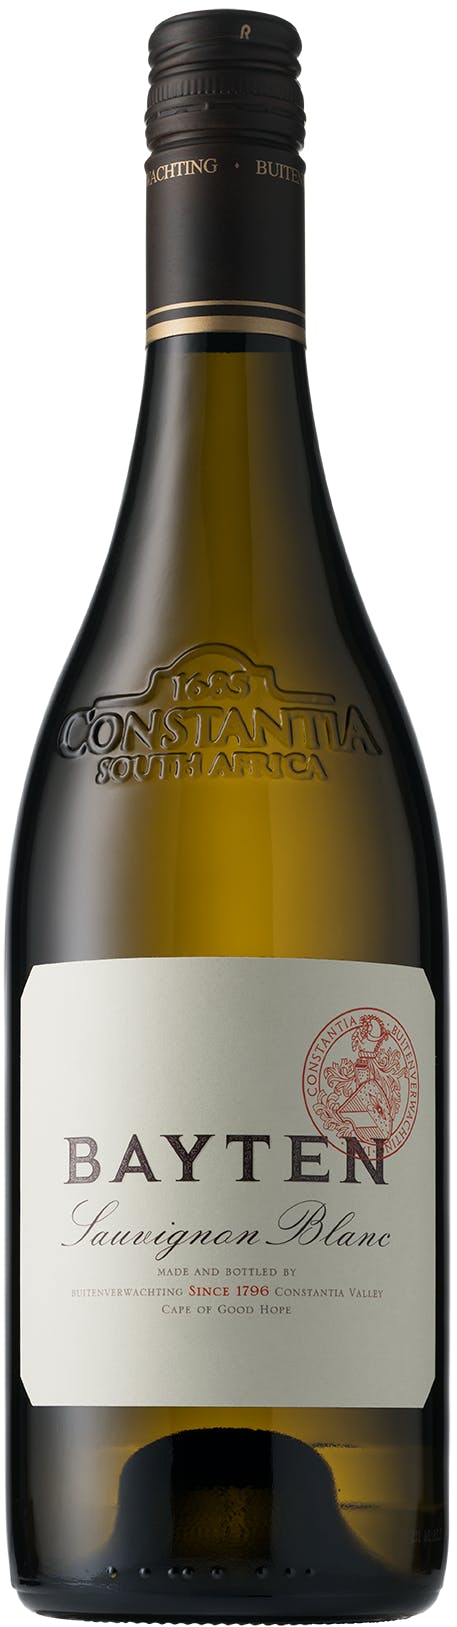 Oyster Bay Sauvignon Blanc 2020 750ml - Cheers Wines and Spirits